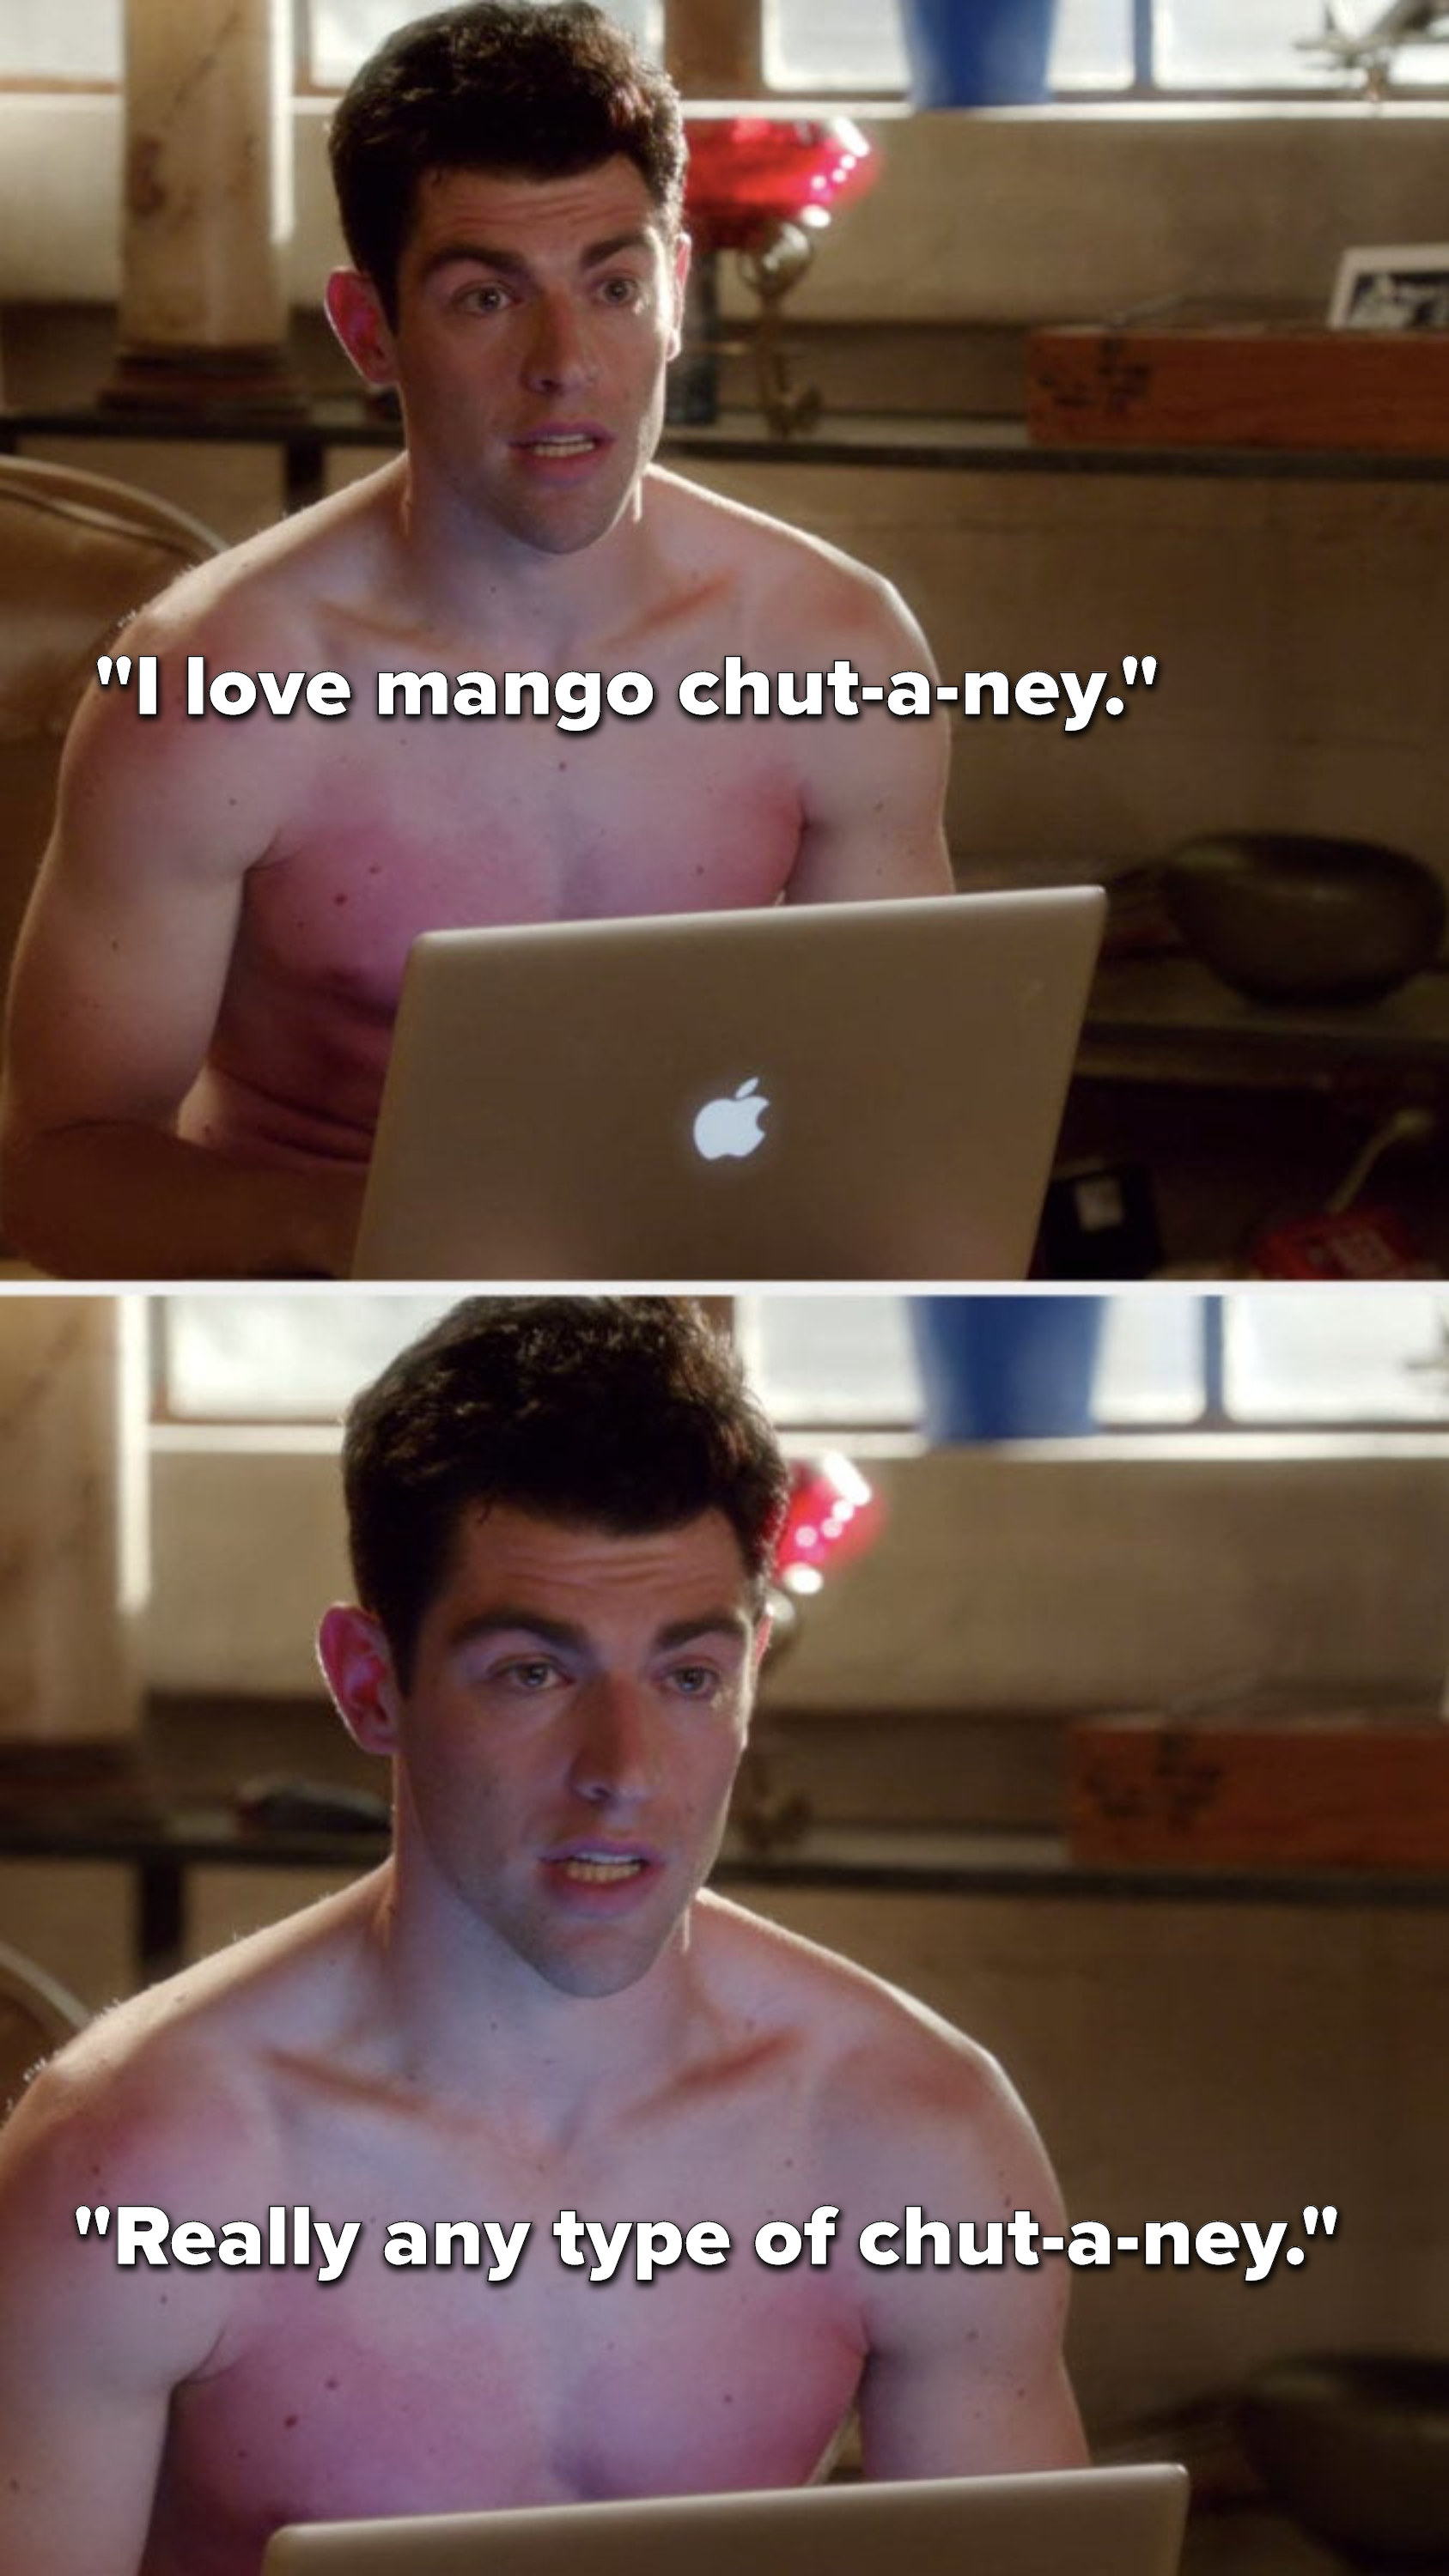 Schmidt says, &quot;I love mango chut-a-ney, really any type of chut-a-ney&quot;